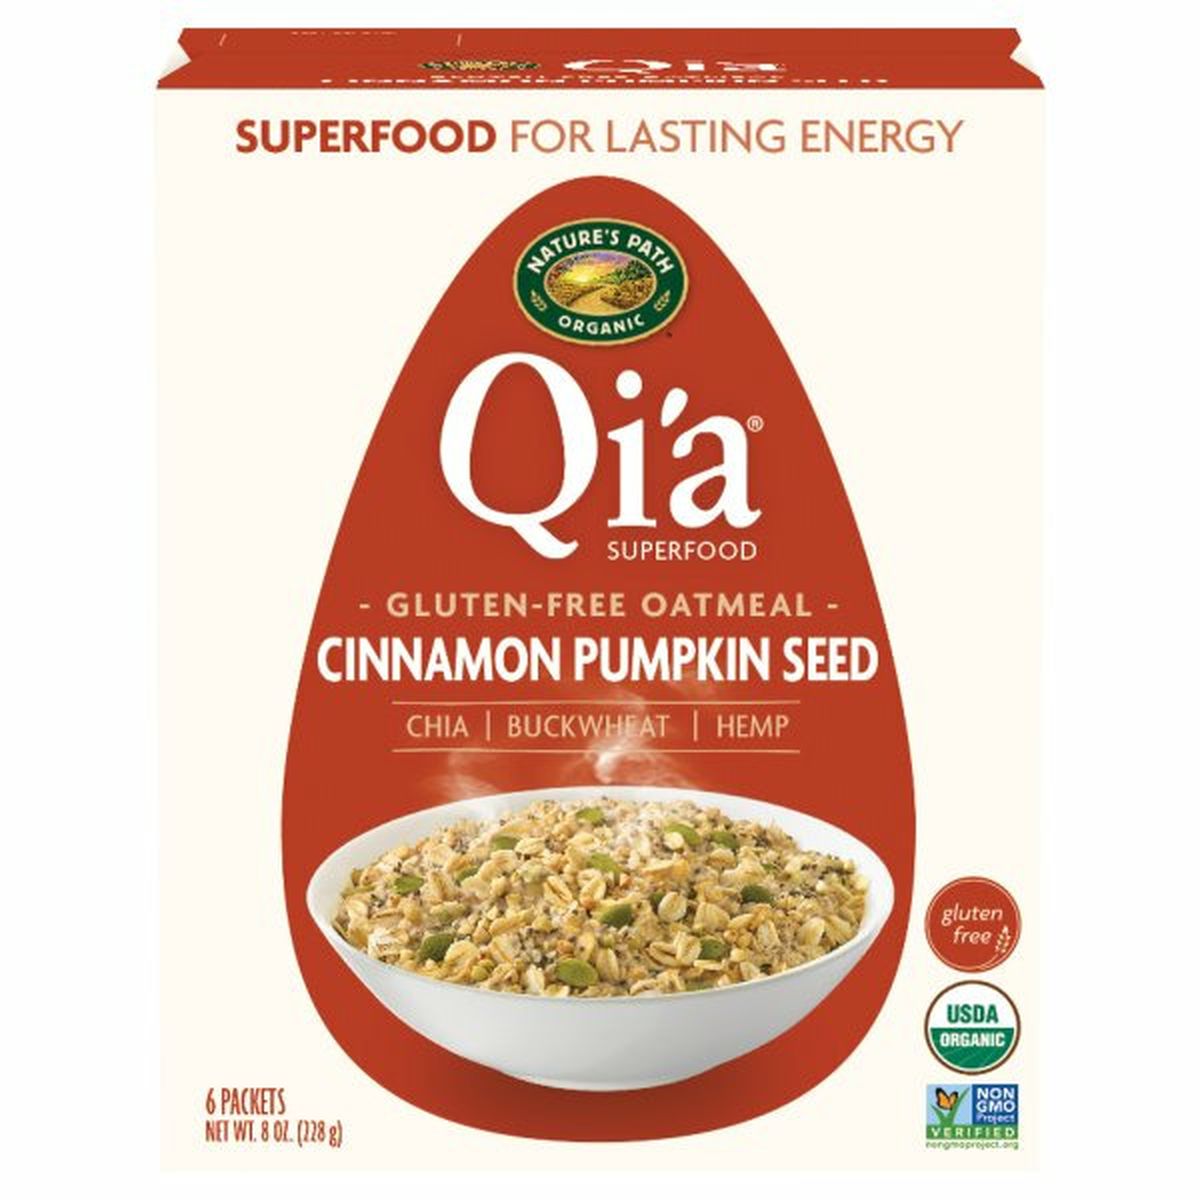 Calories in Nature's Path Qi'a Qi'a Superfood Oatmeal, Gluten-Free, Cinnamon Pumpkin Seed